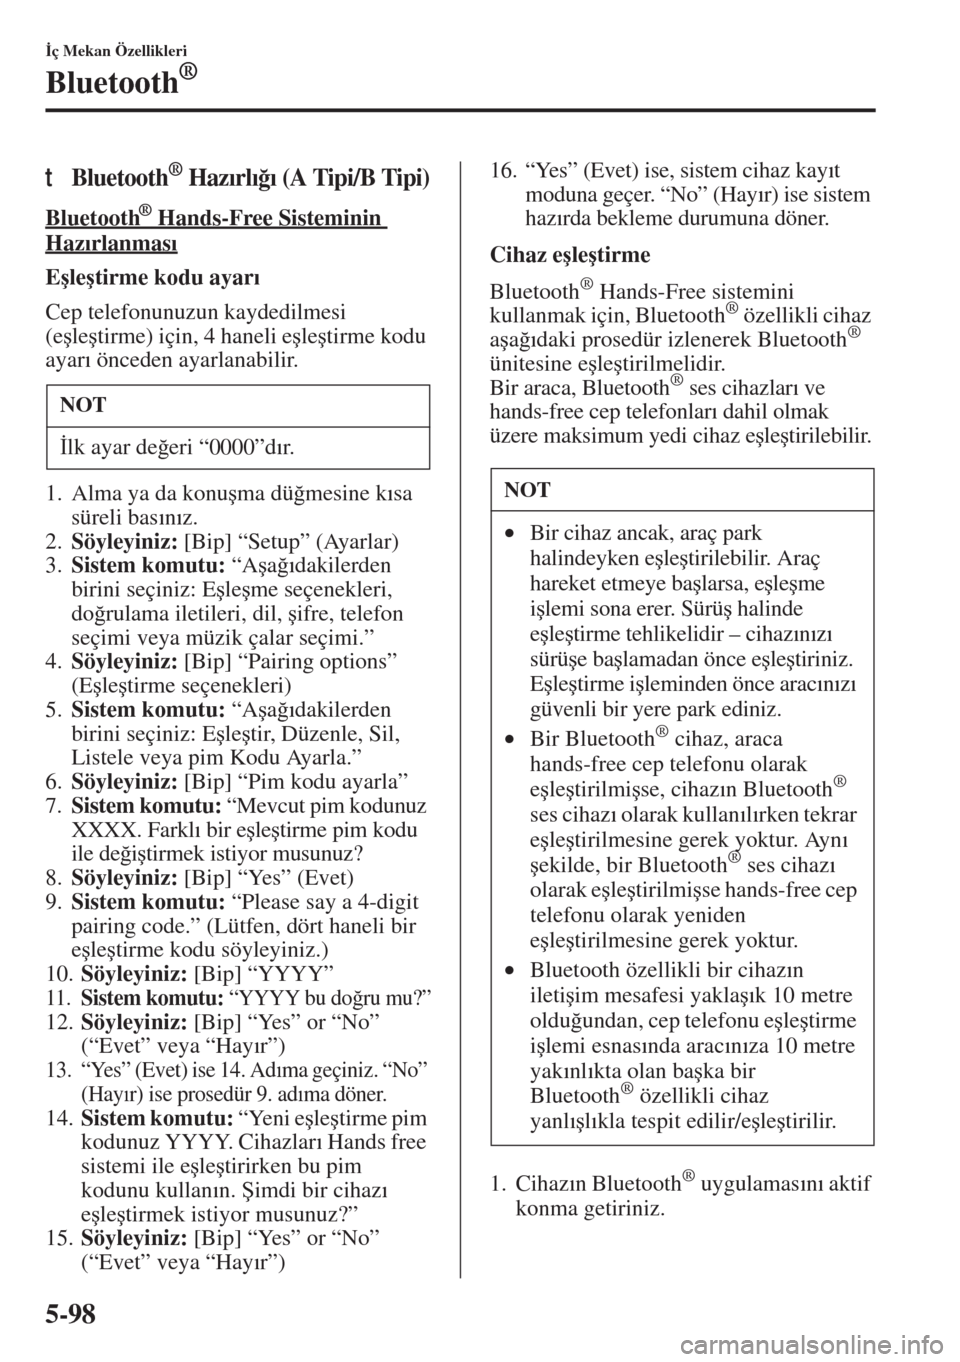 MAZDA MODEL 3 HATCHBACK 2015  Kullanım Kılavuzu (in Turkish) 5-98
�øç Mekan Özellikleri
Bluetooth®
tBluetooth® Haz�Õrl�Õ�÷�Õ (A Tipi/B Tipi)
Bluetooth   ® Hands-Free Sisteminin 
Haz�Õrlanmas�Õ
E�úle�útirme kodu ayar�Õ
Cep telefonunuzun kaydedilme